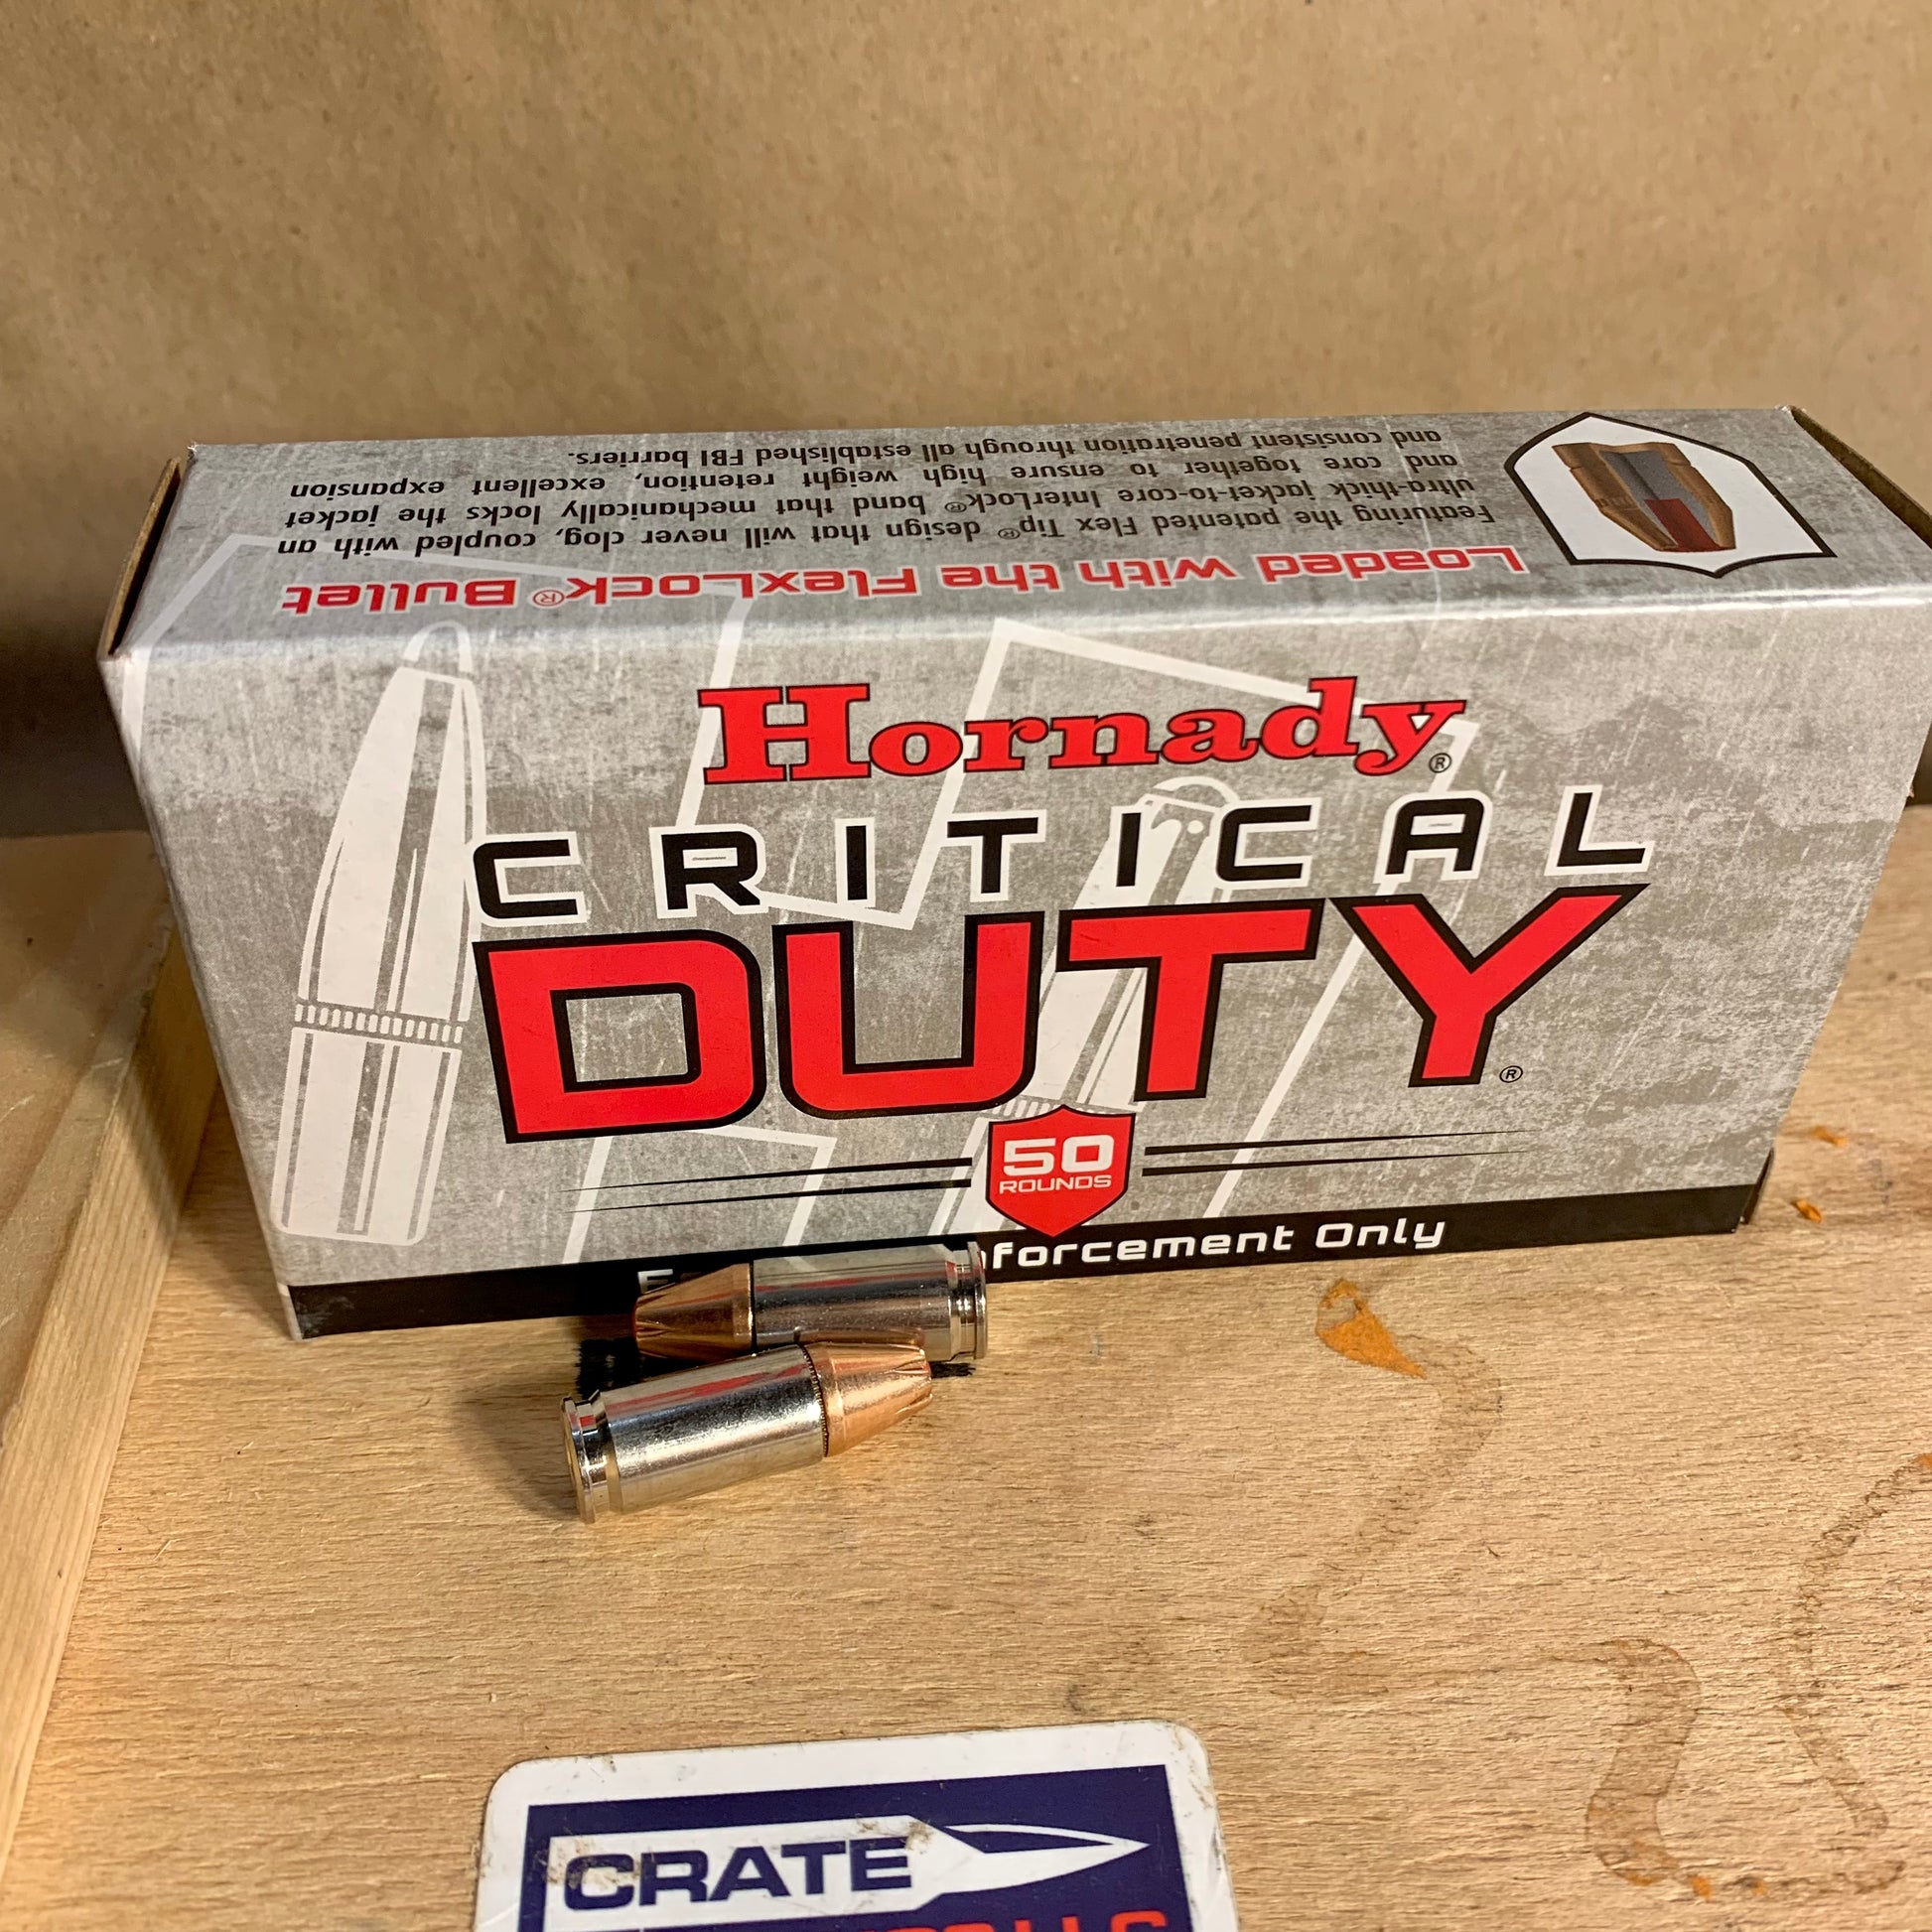 50 Round Box Hornady Critical Duty 9mm Luger +P Ammo 124gr FlexLock - 90215